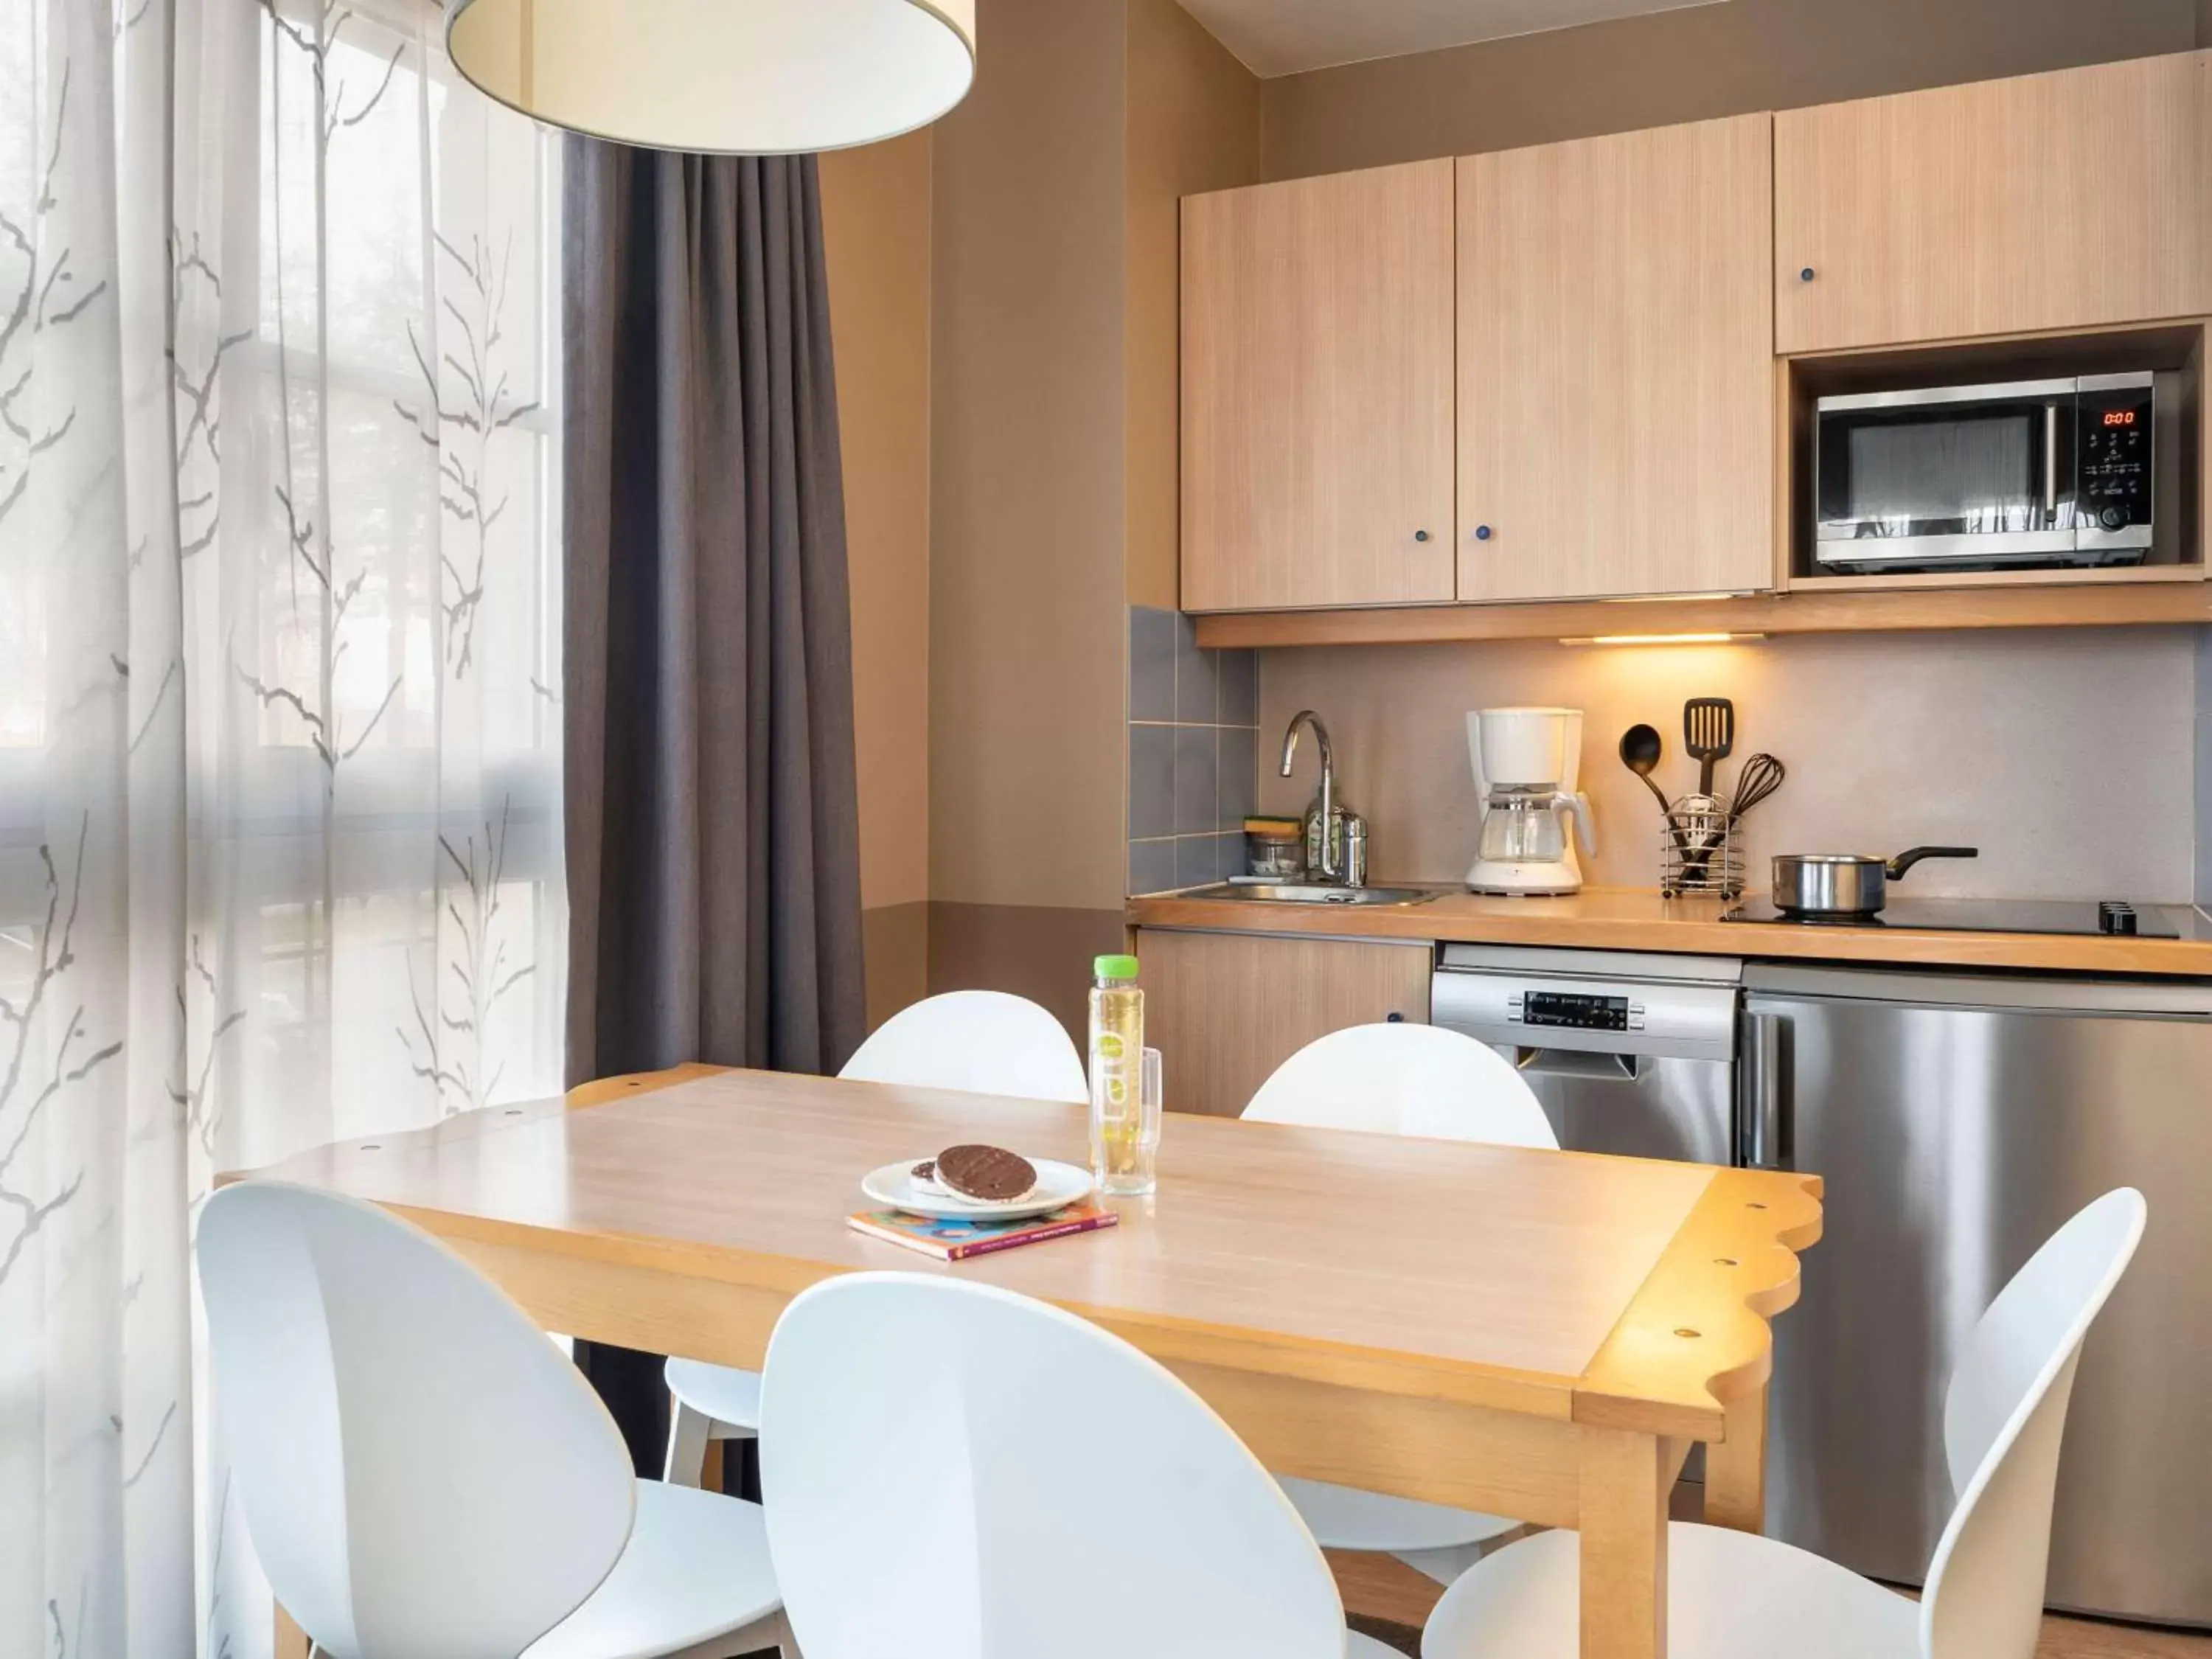 Photo of the whole room, Dining Area in Aparthotel Adagio Marne La Vallée - Val d'Europe